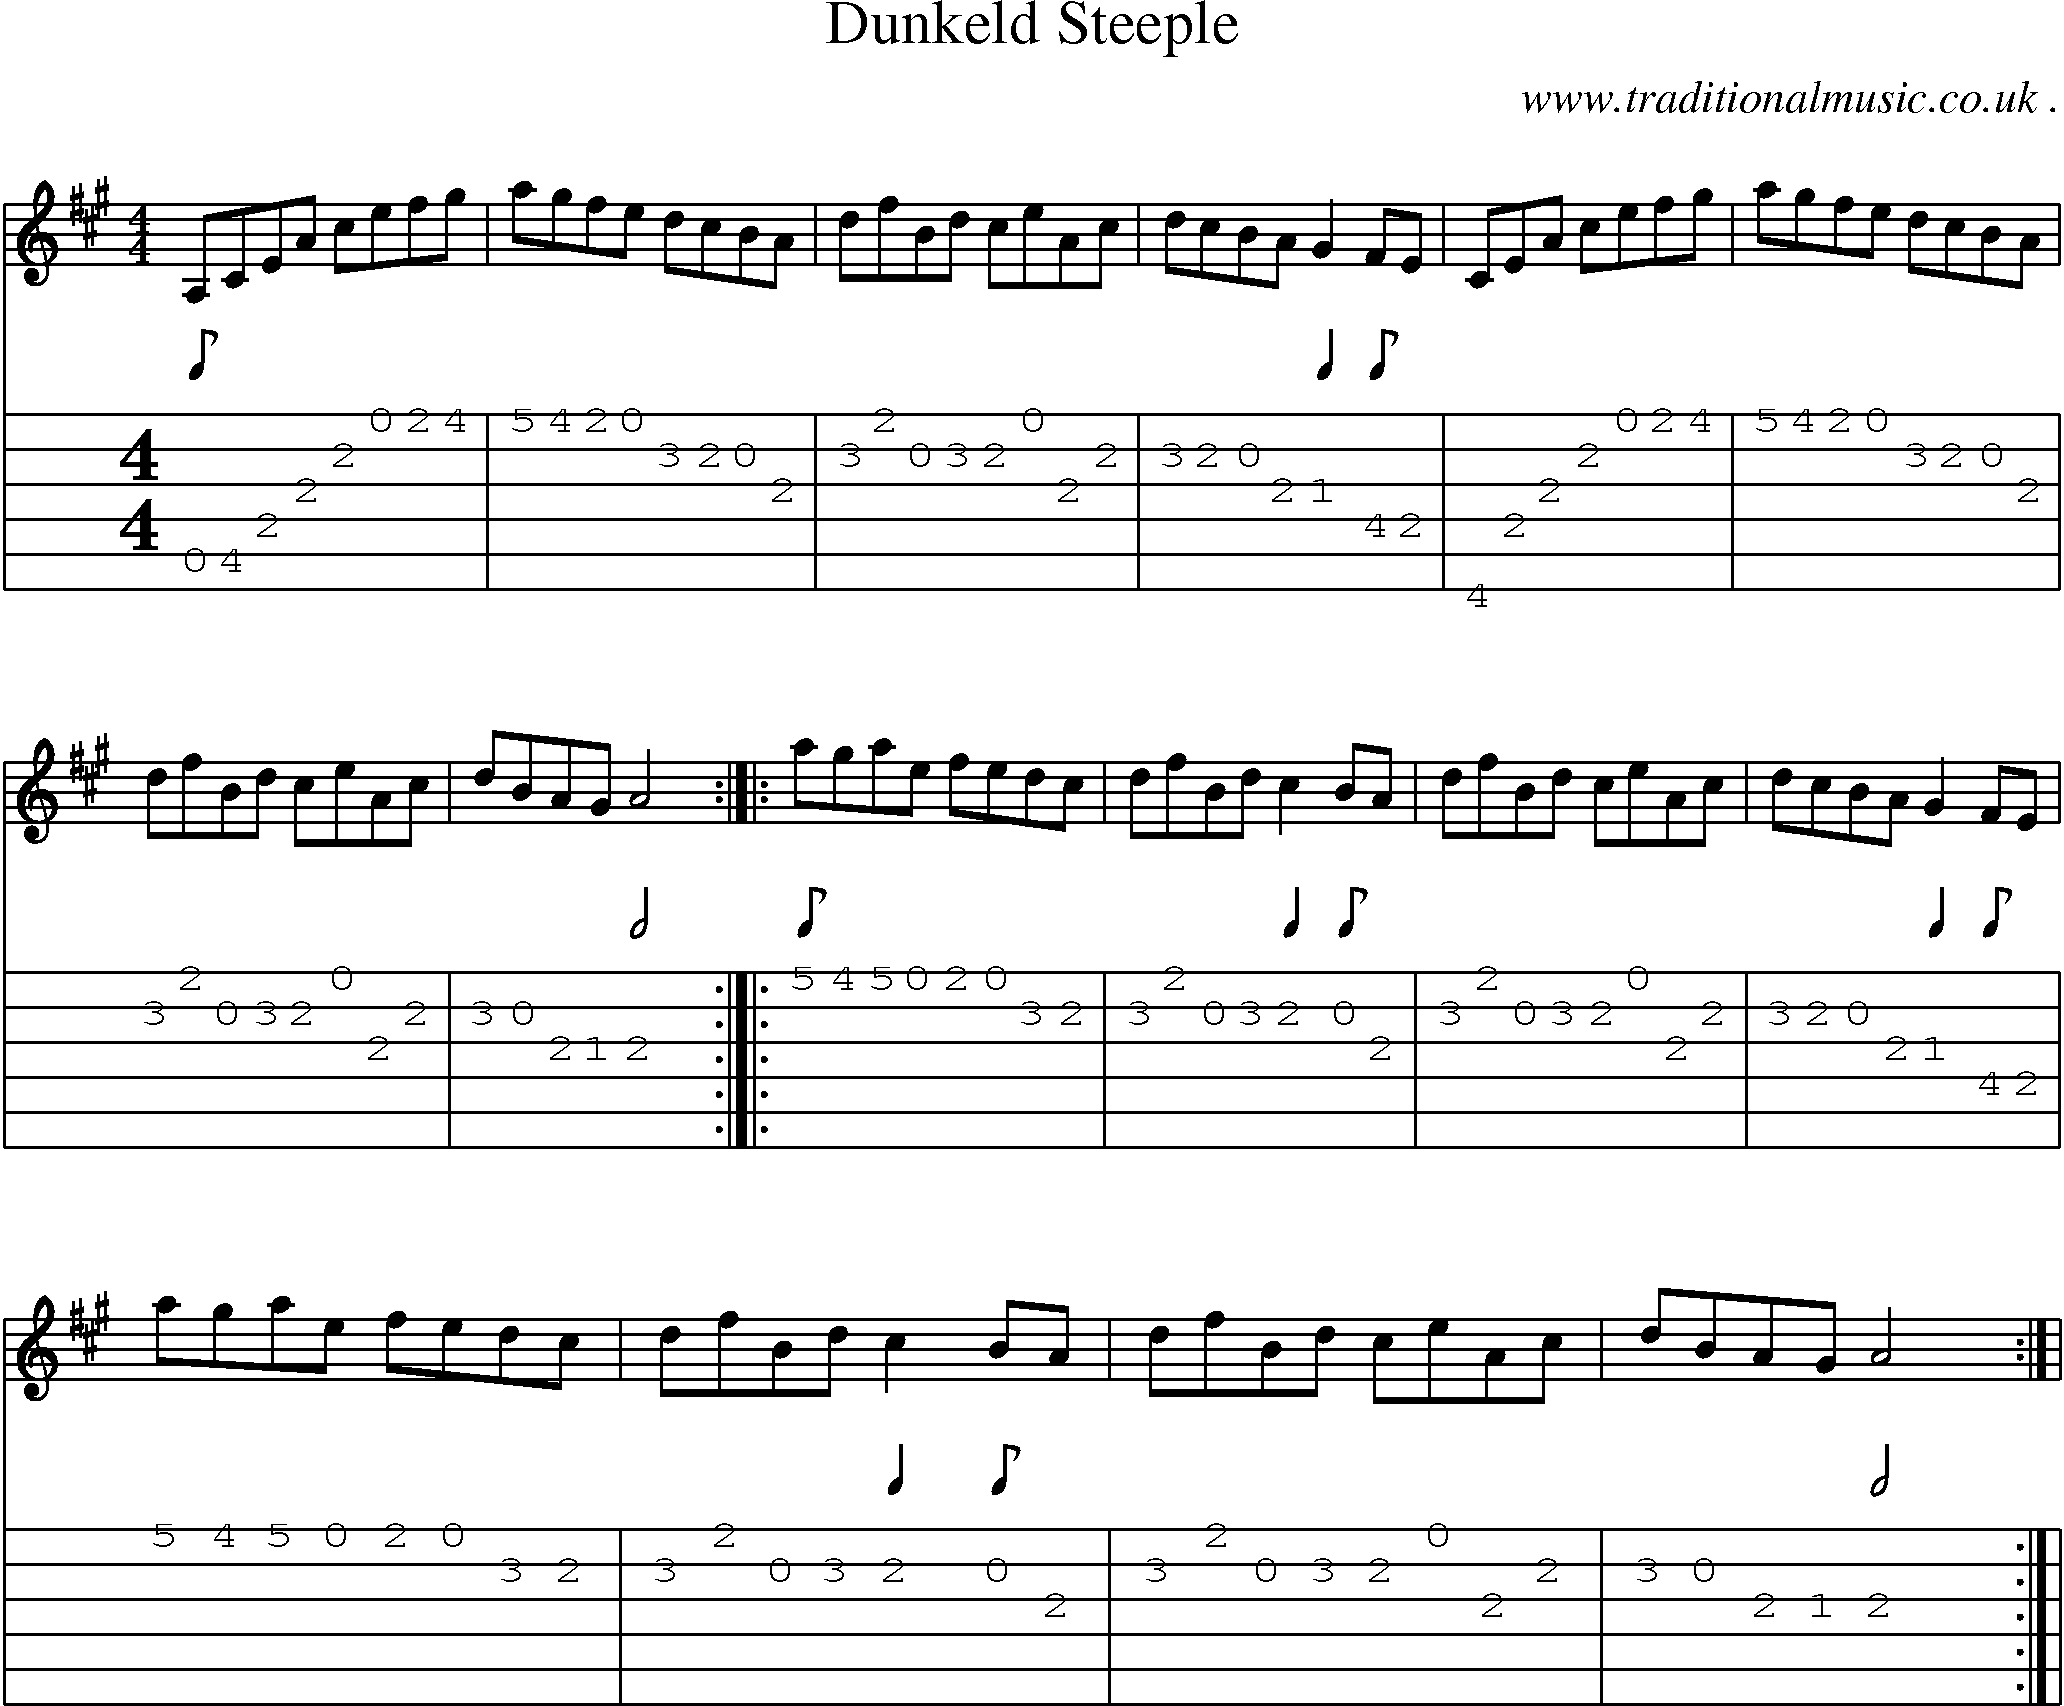 Sheet-Music and Guitar Tabs for Dunkeld Steeple